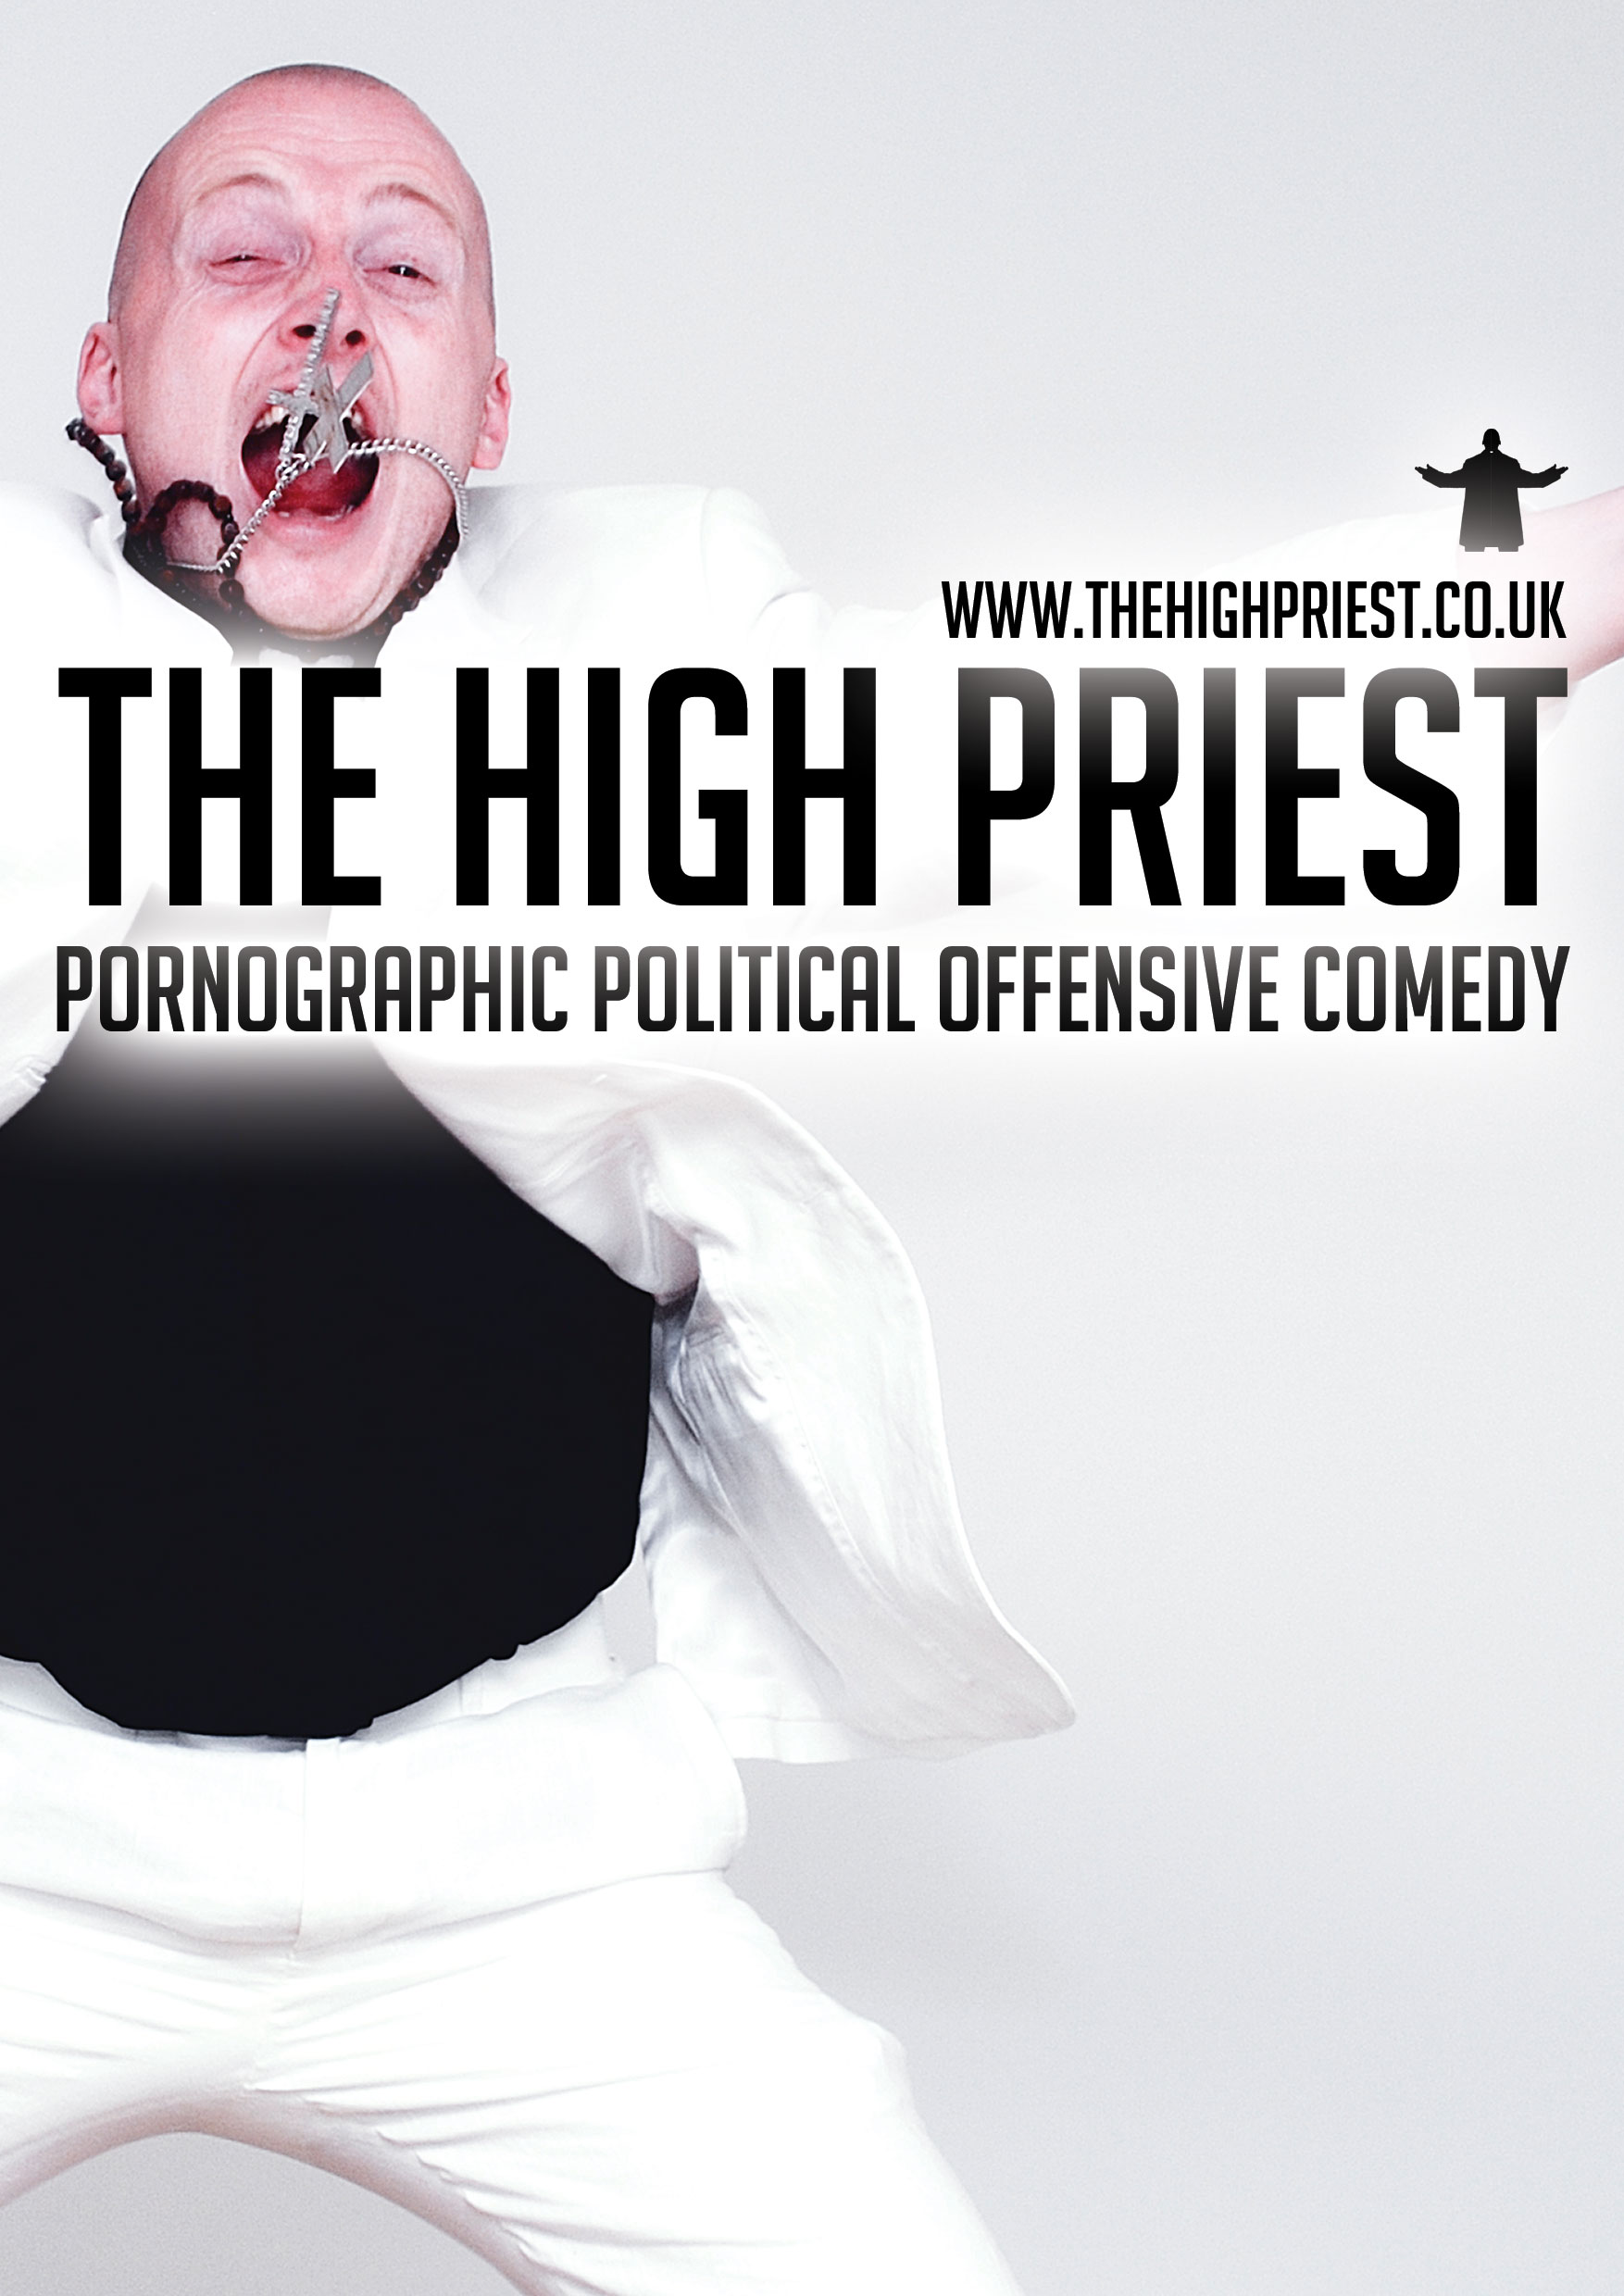 The High Priest 'Pornographic Political Offensive Comedy' gig show poster